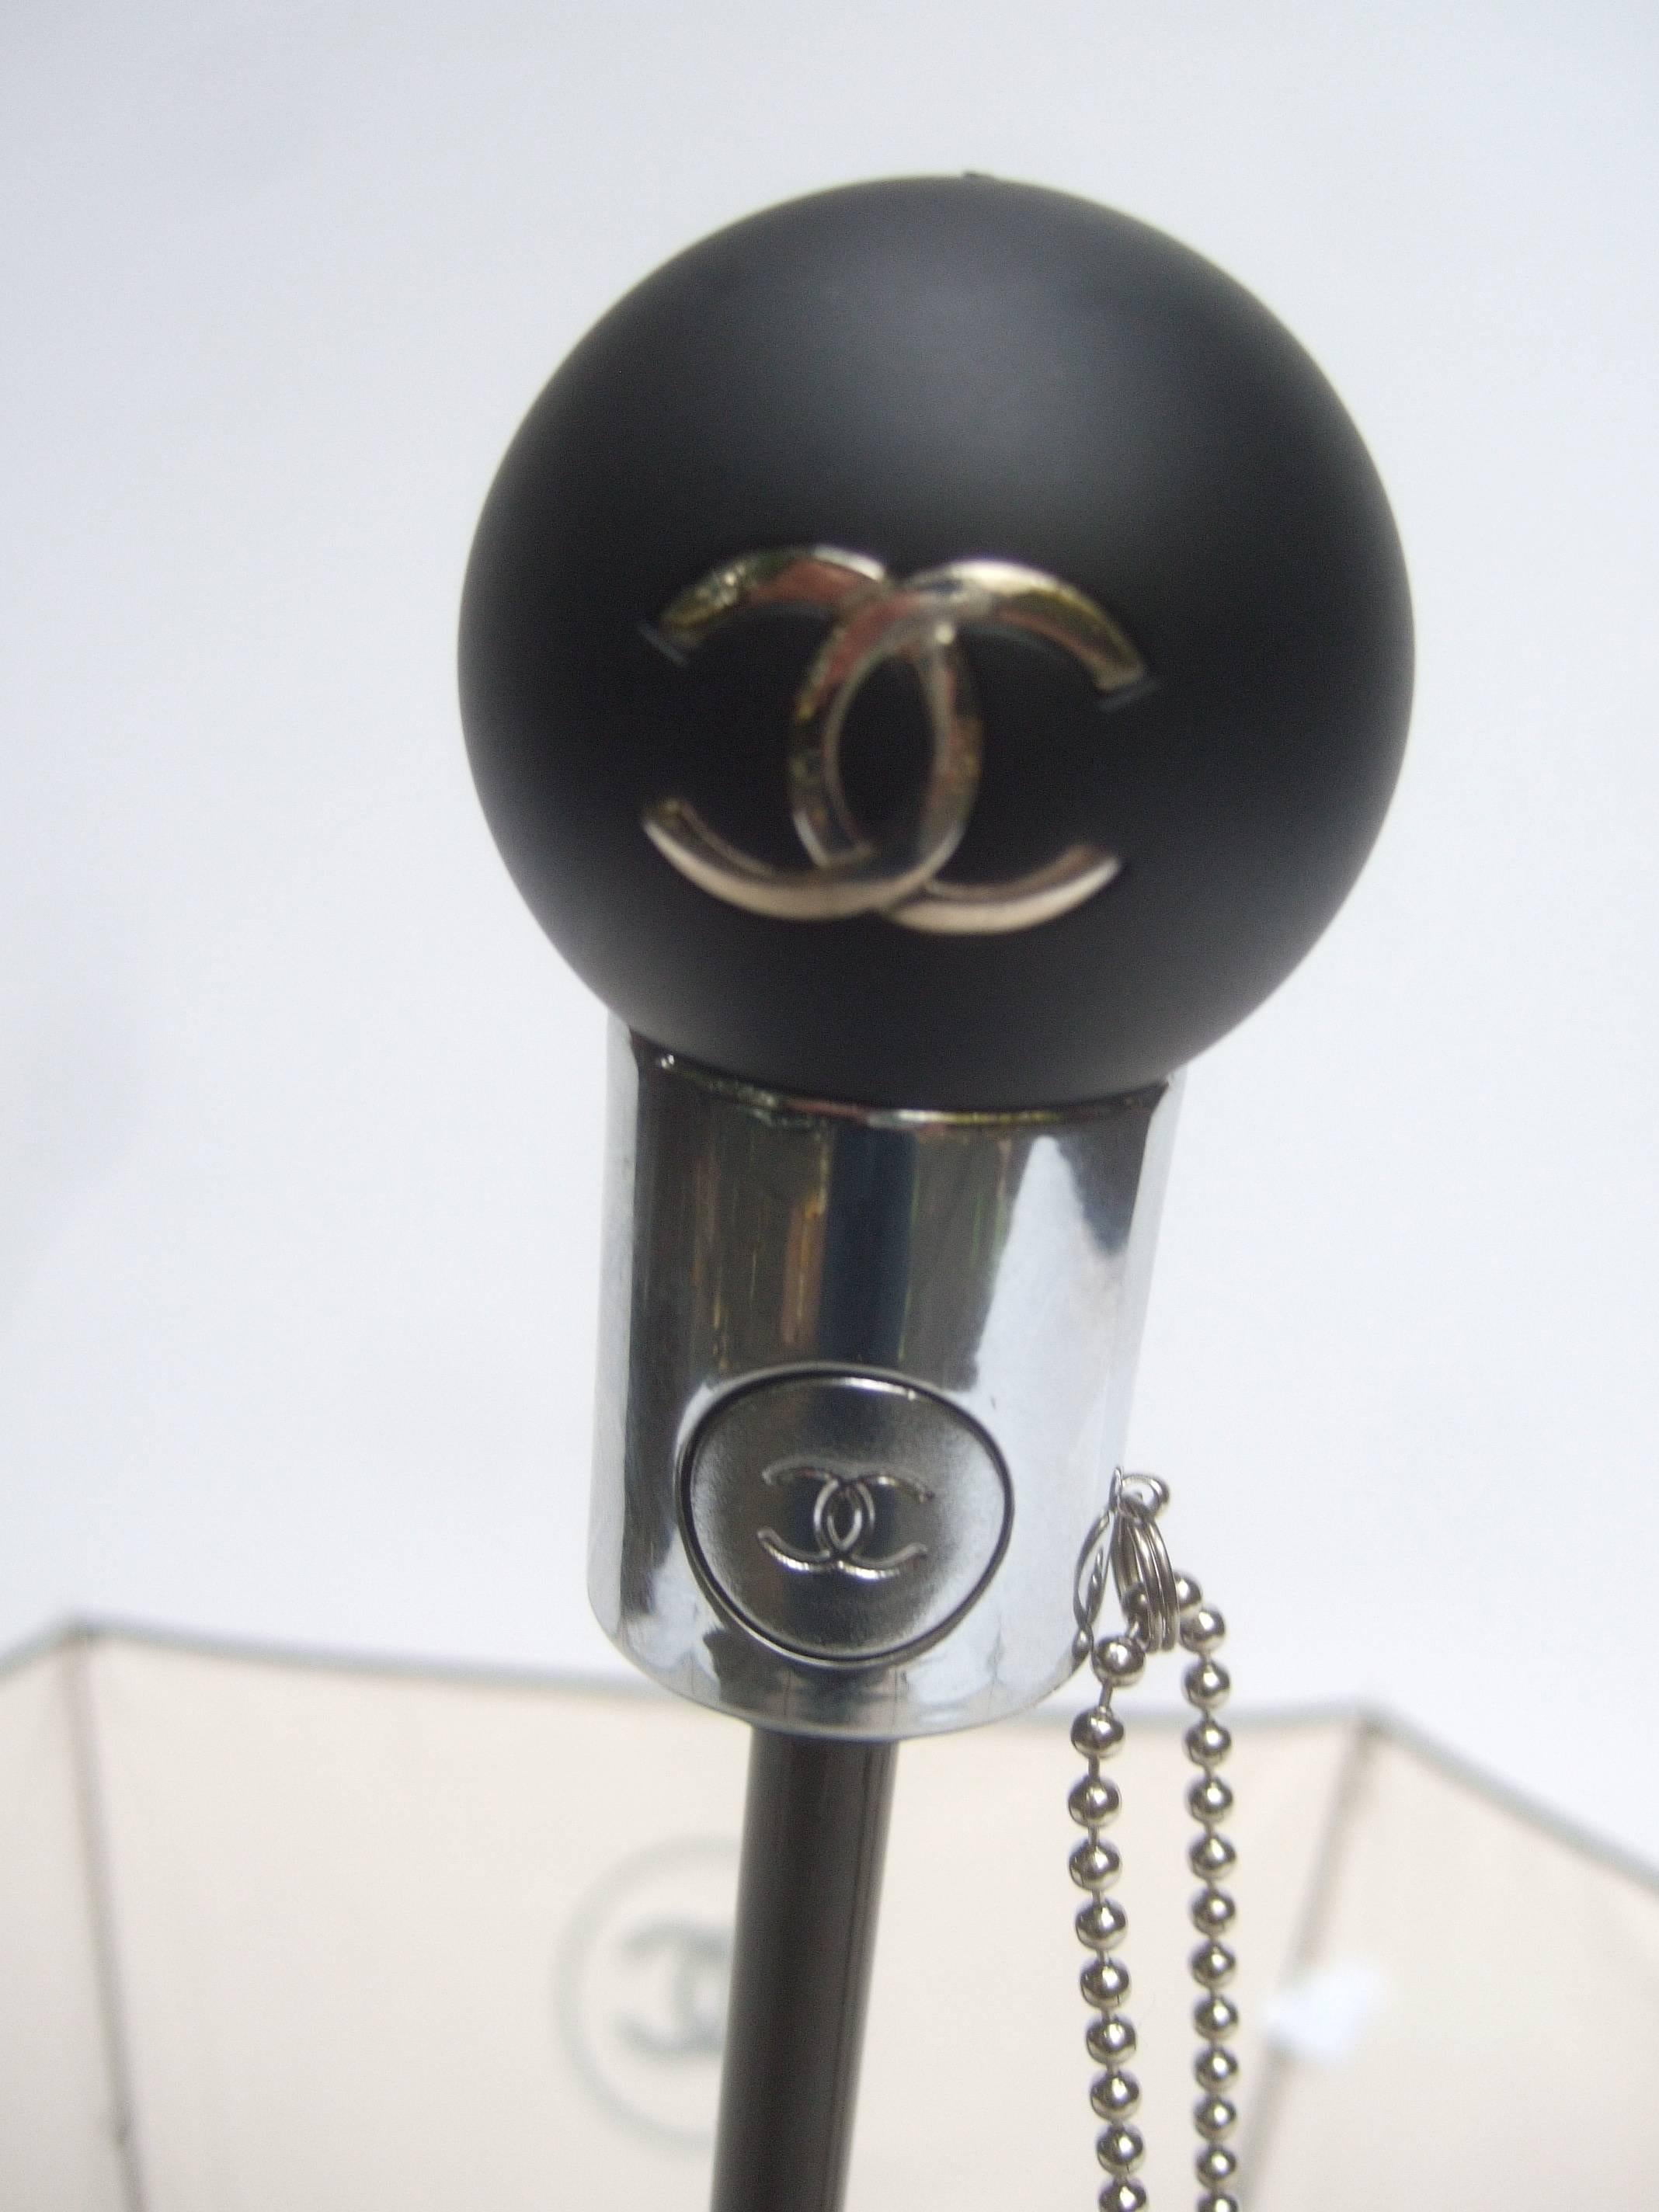 Chanel Stylish Black and Ivory Nylon Umbrella in Chanel Box 2